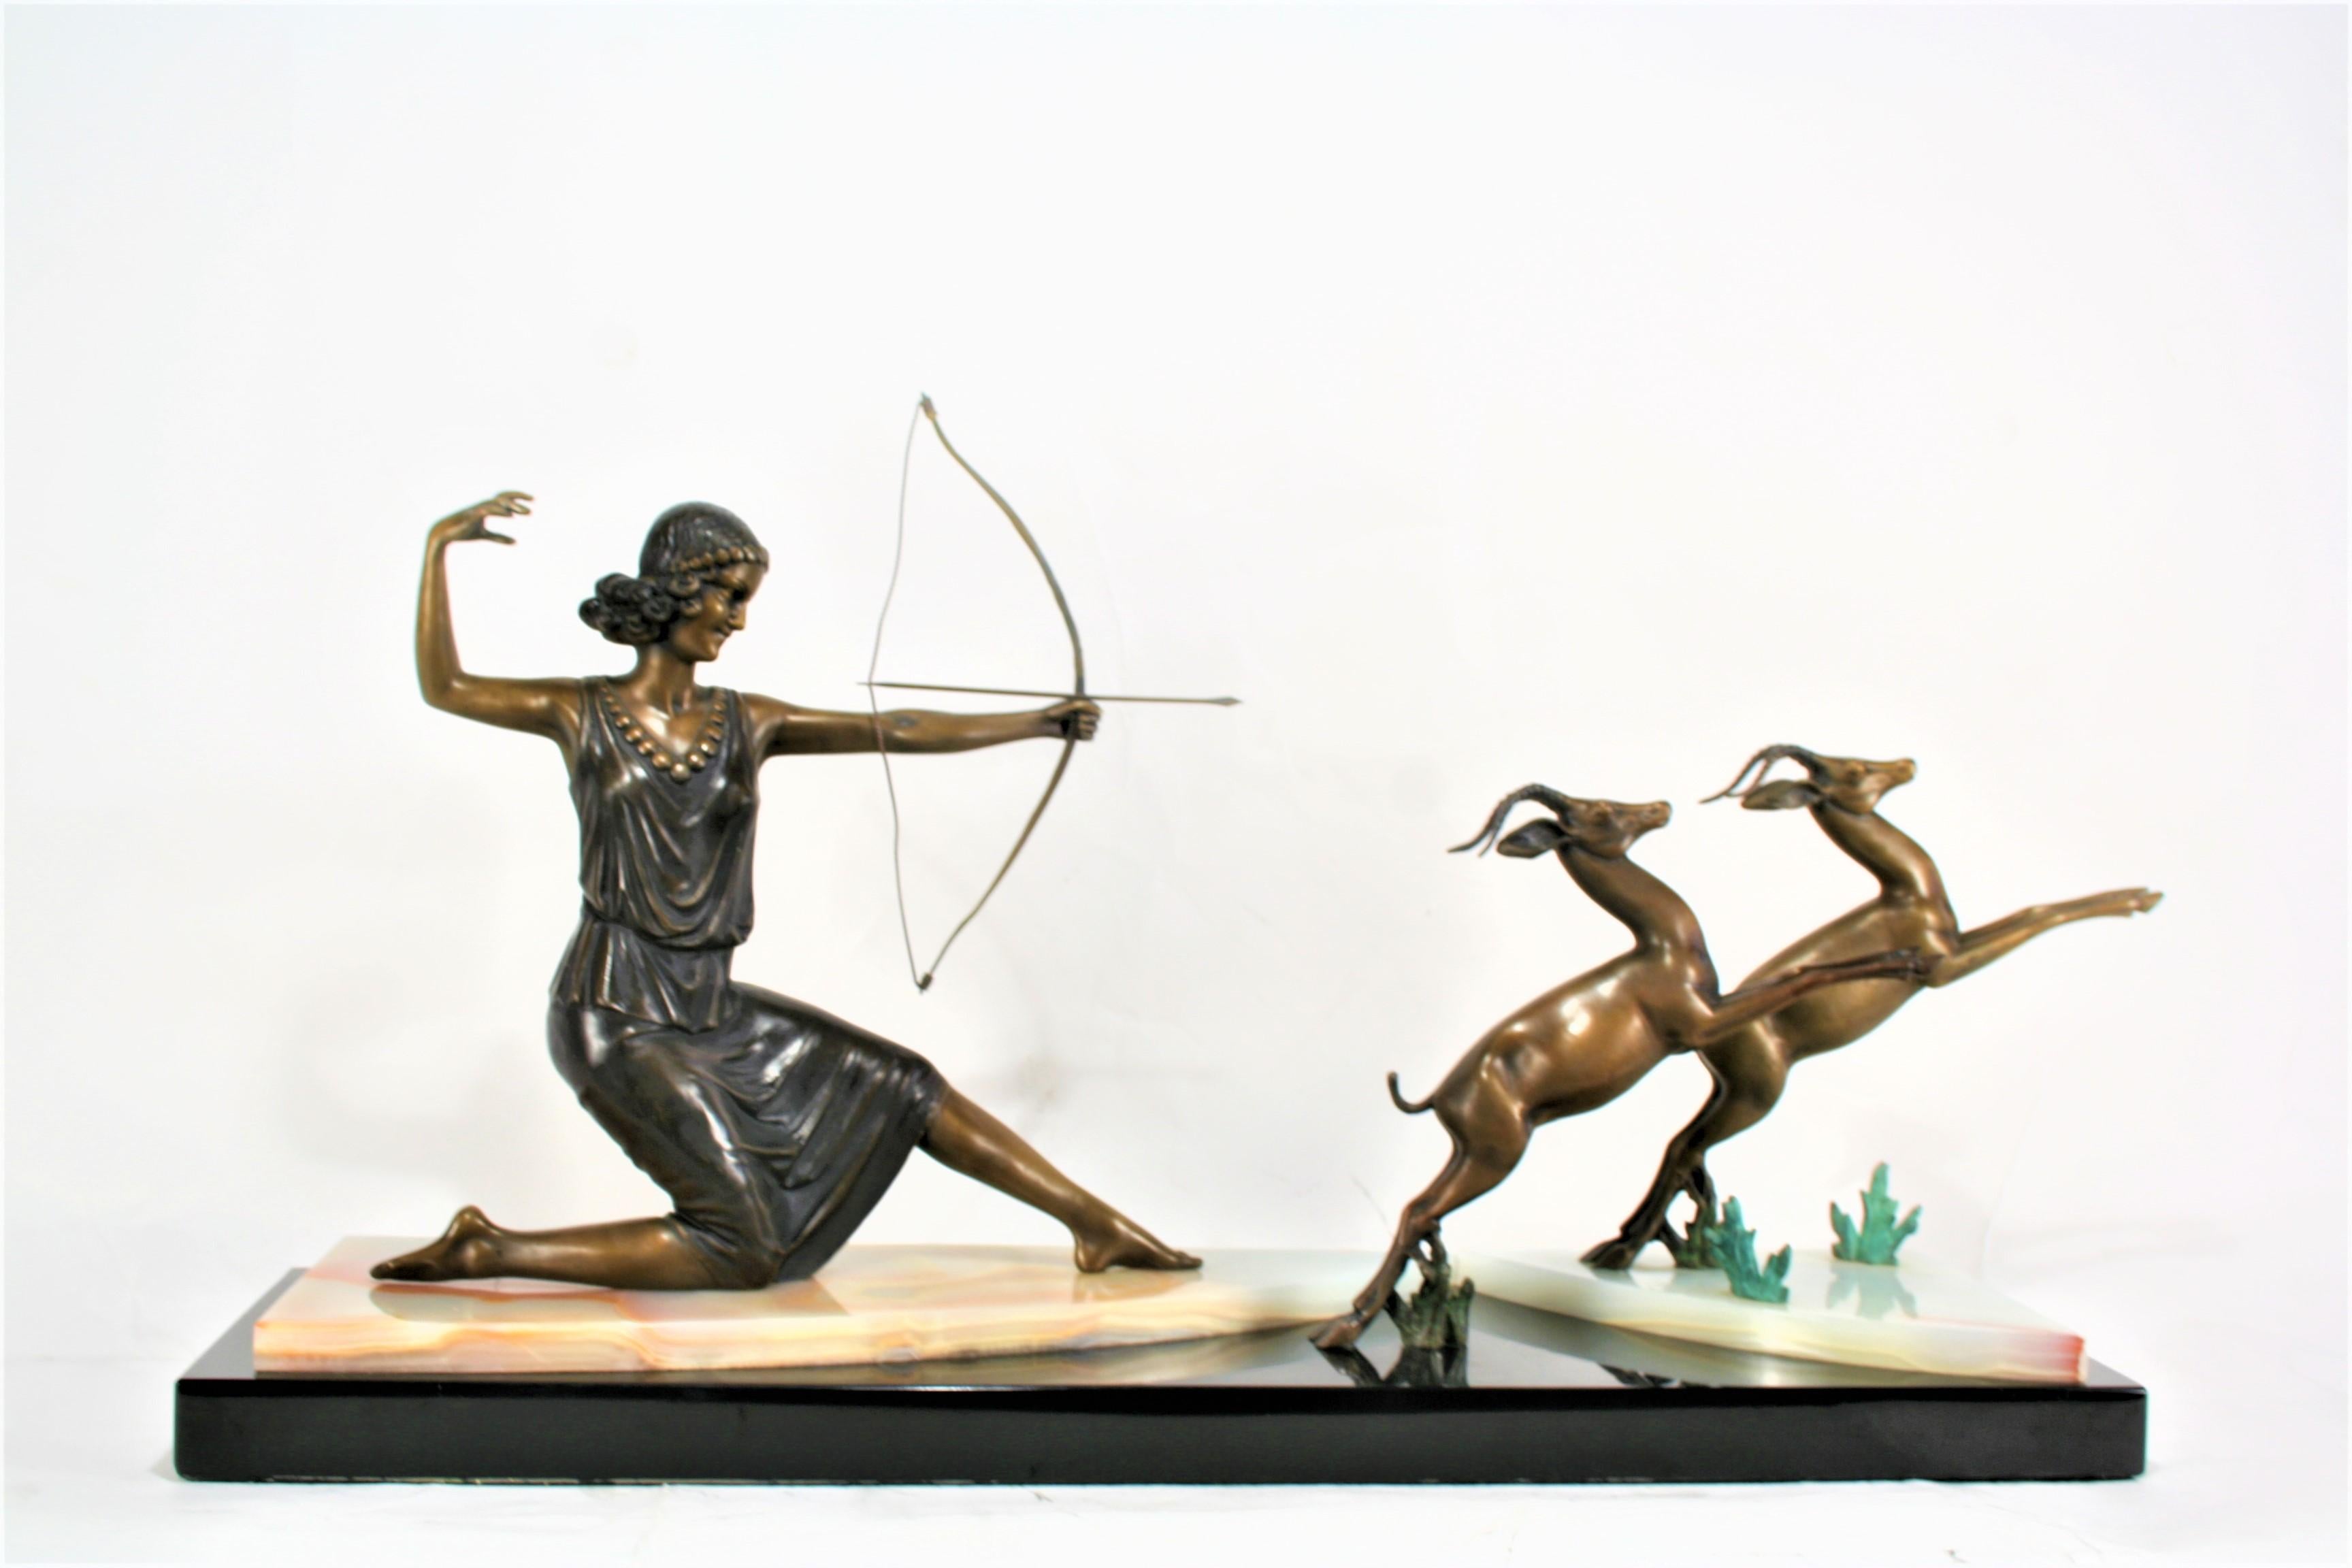 North American Art Deco /Modern Bronze Sculpture Dianna For Sale